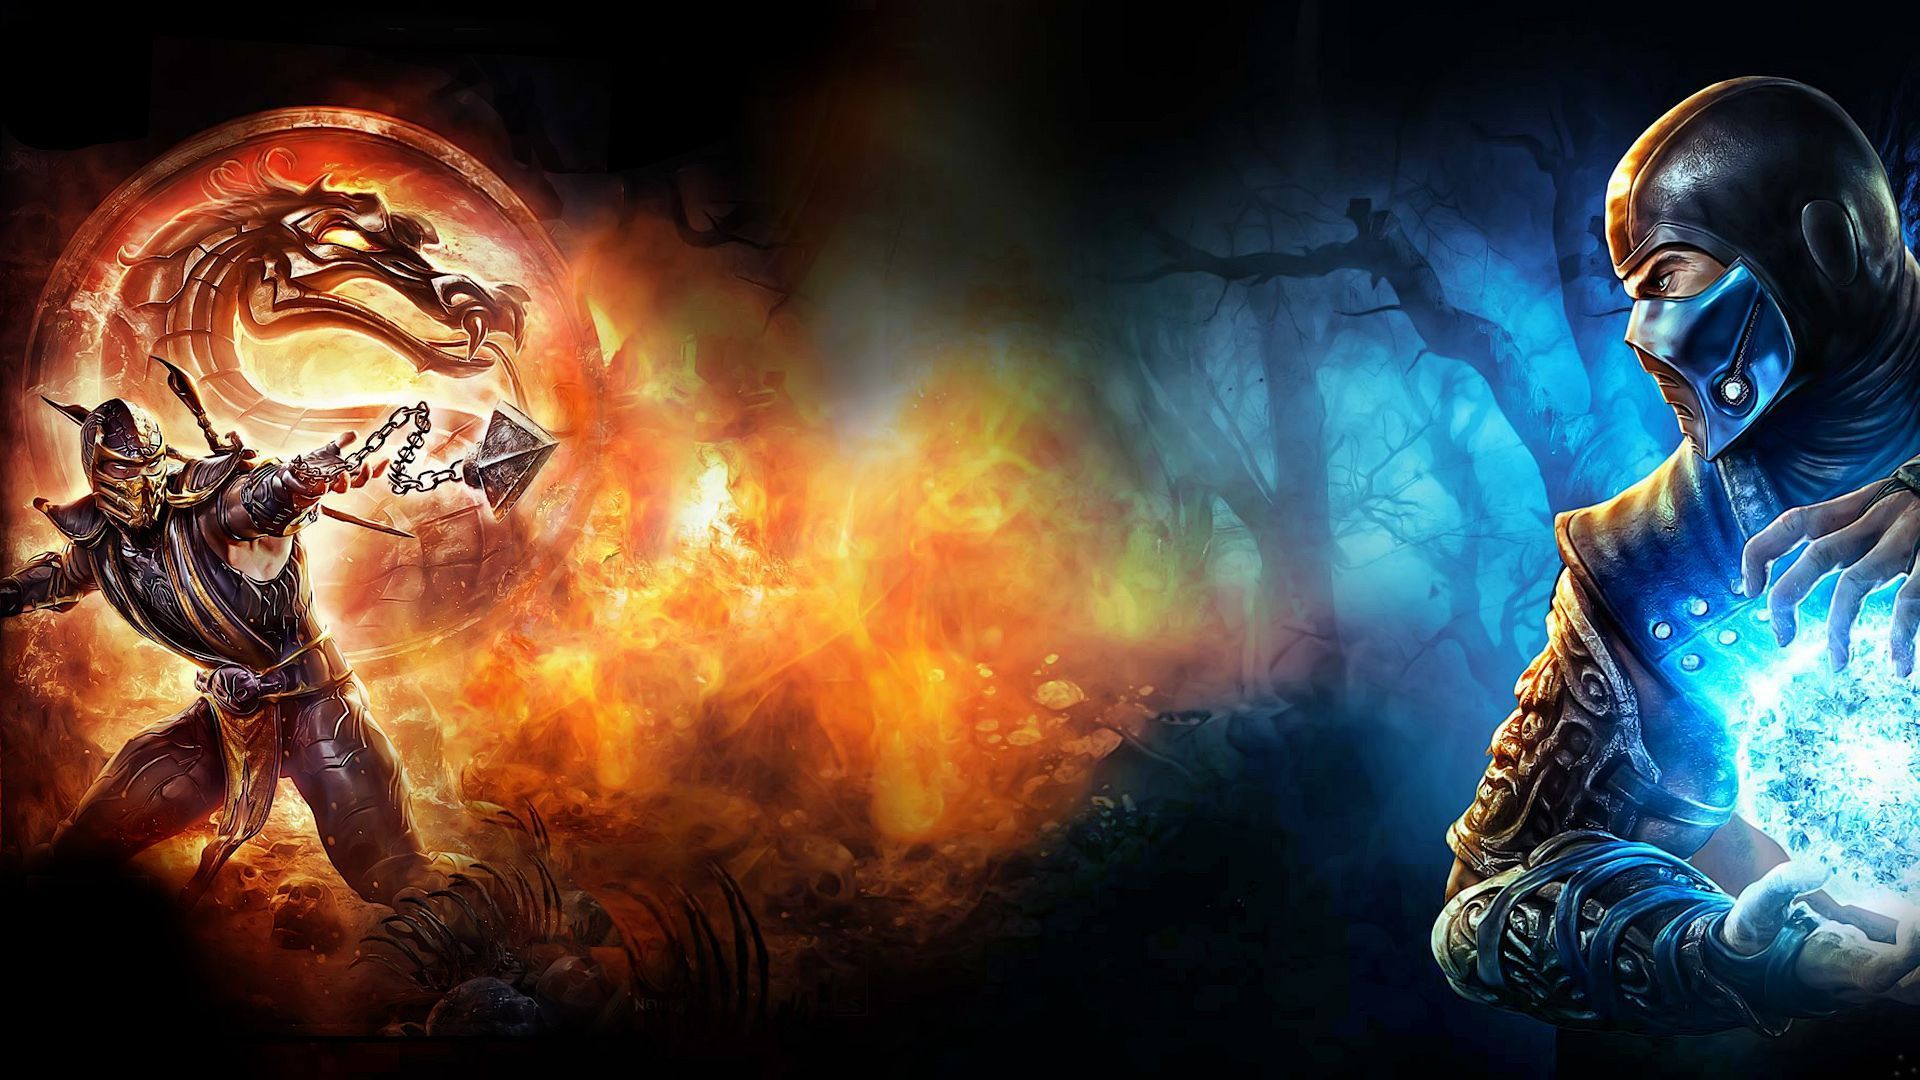 145 Mortal Kombat HD Wallpapers | Backgrounds - Wallpaper Abyss